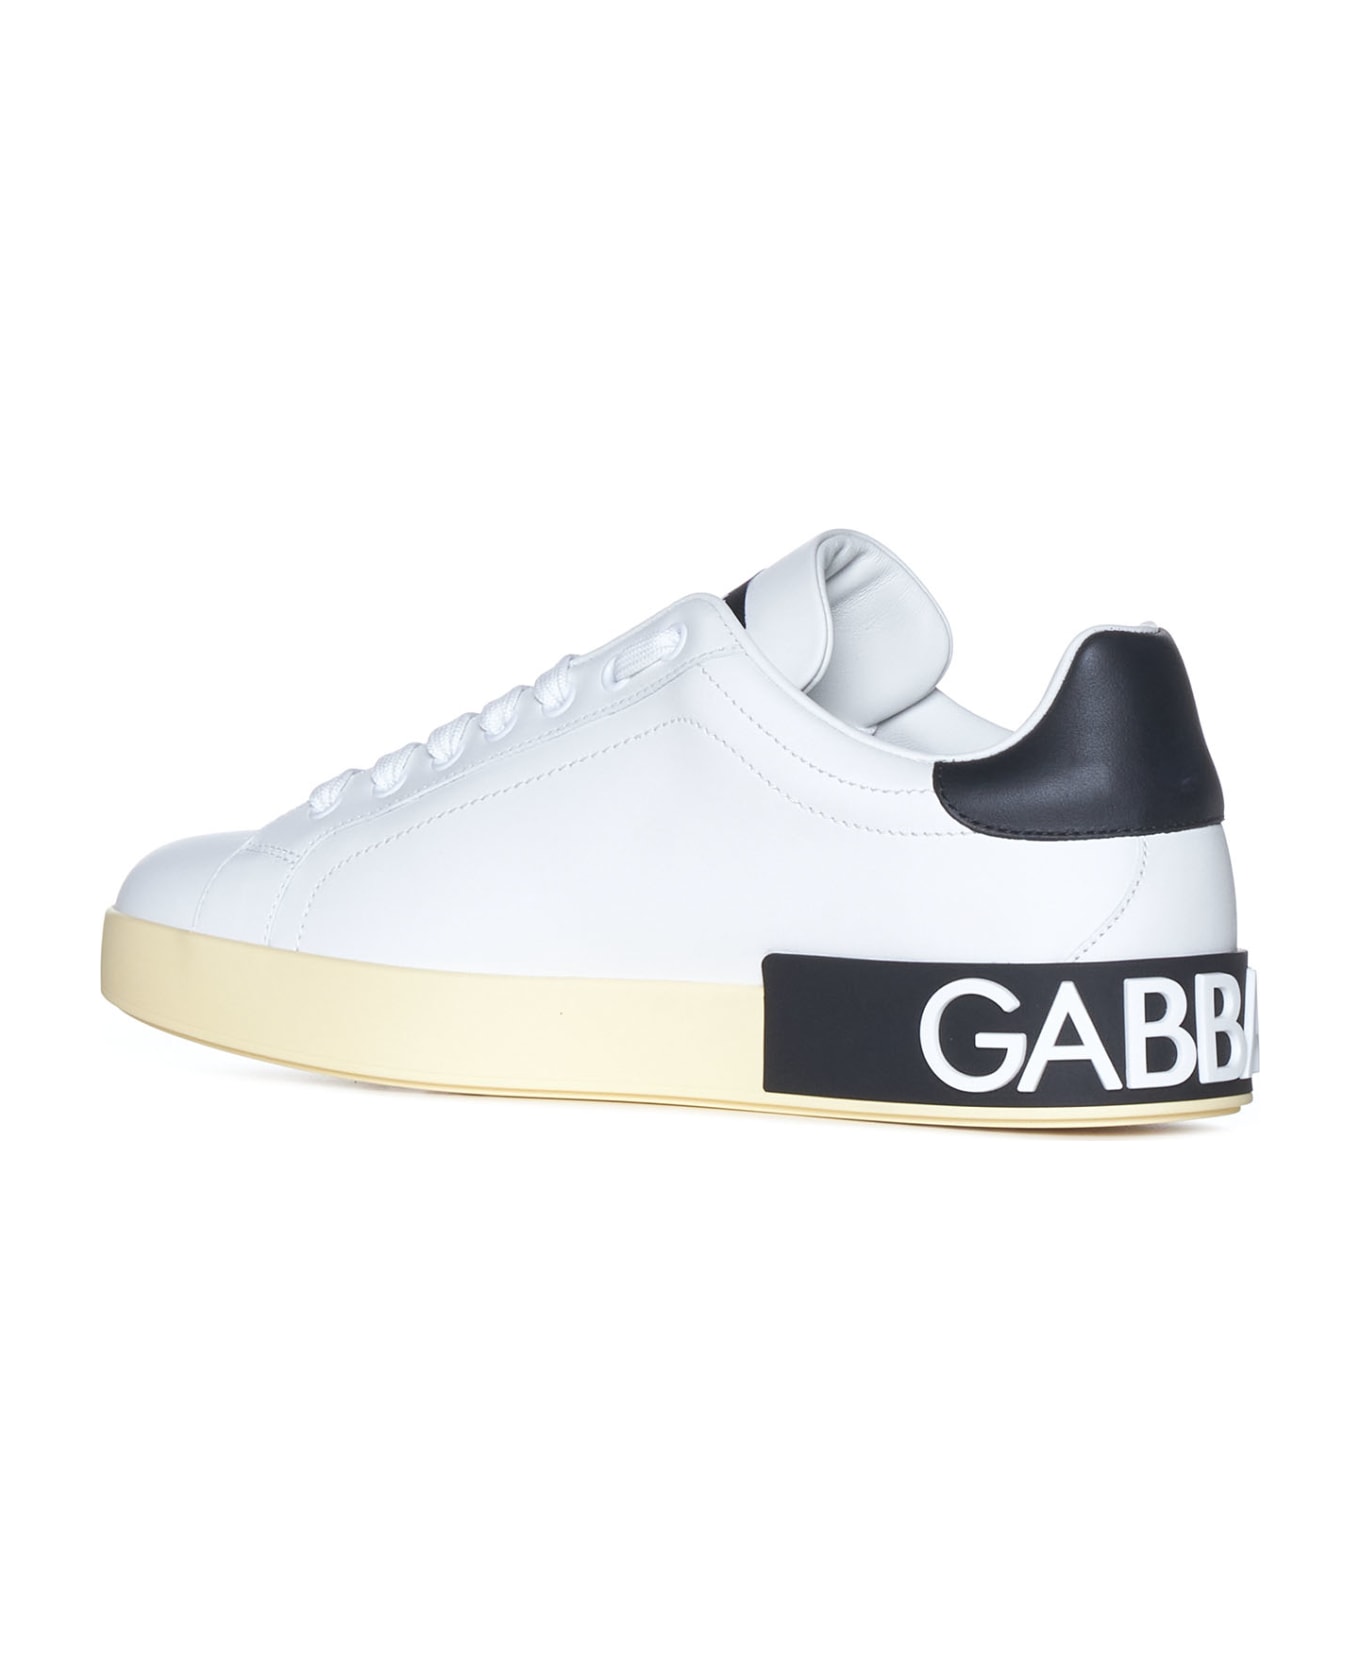 Dolce & Gabbana Portofino Nappa Sneaker With Printed Dg Logo - White